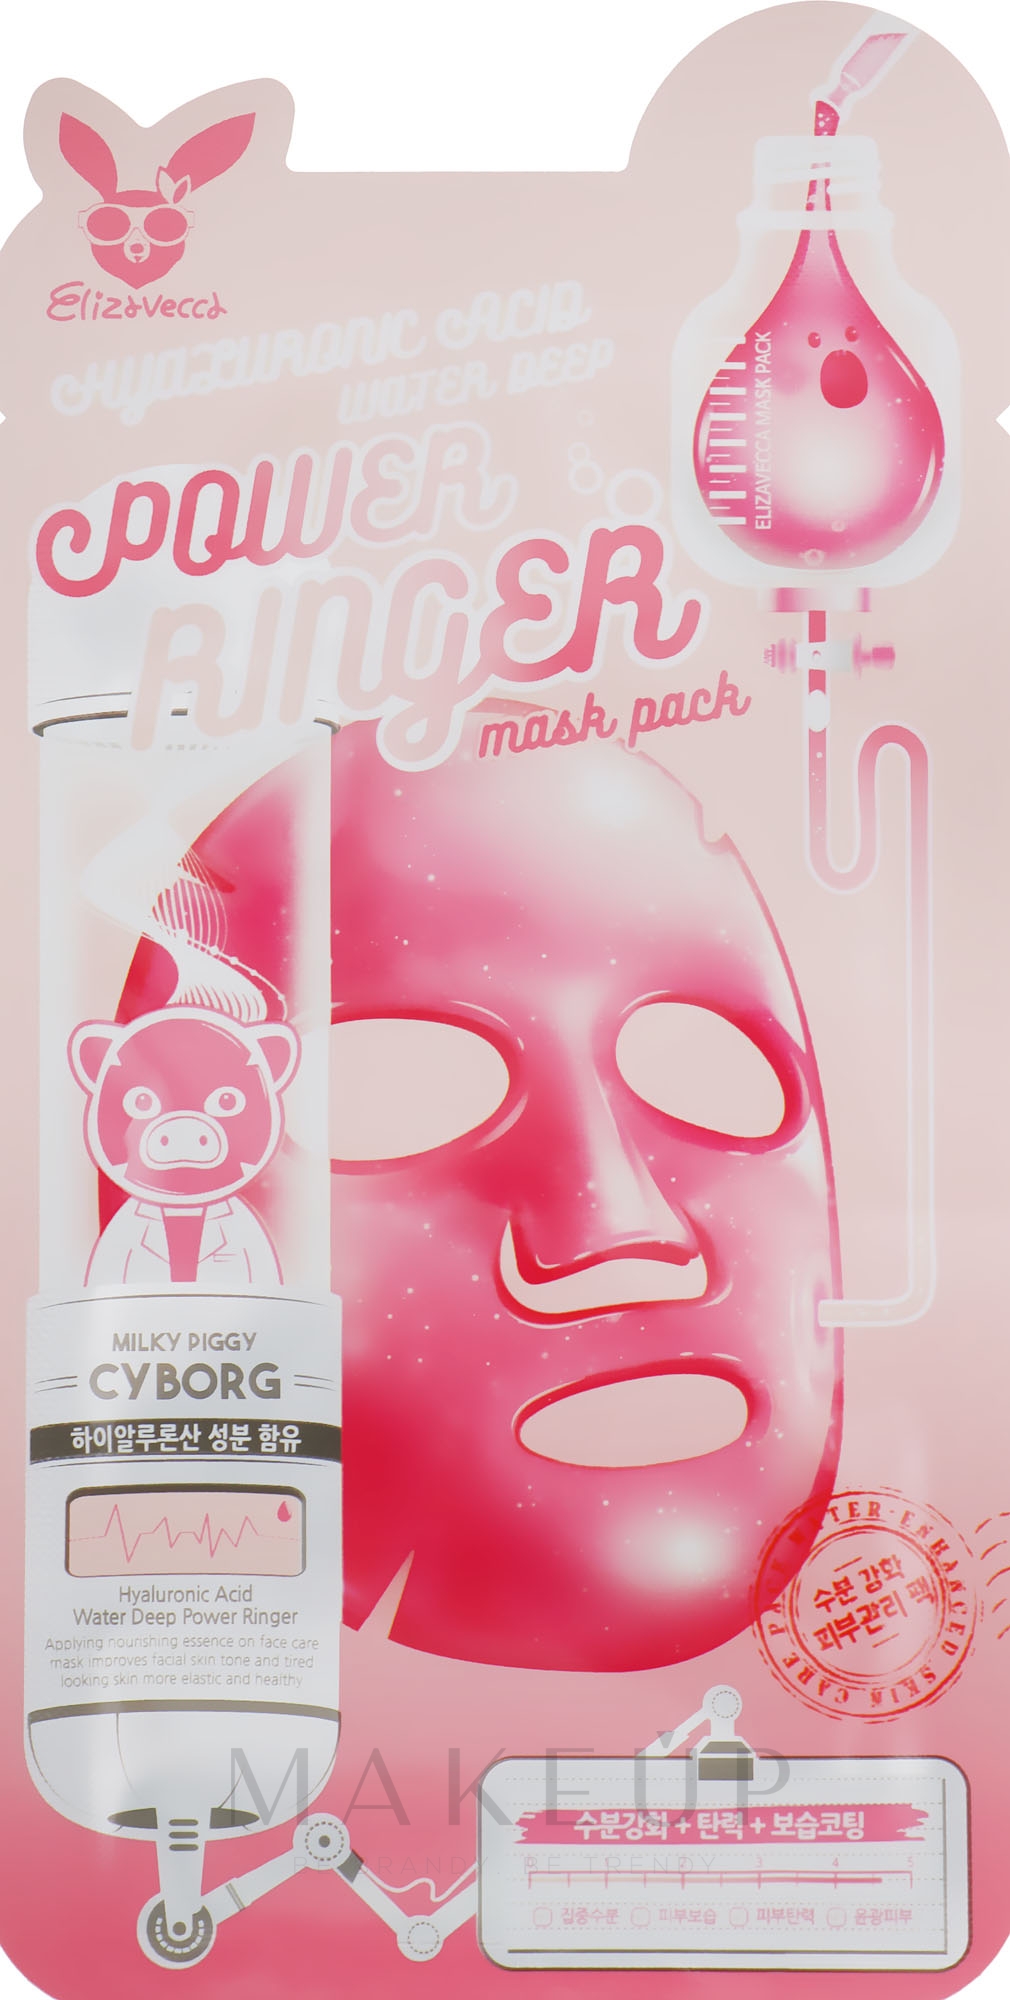 Feuchtigkeitsspendende Tuchmaske mit Hyaluronsäure - Elizavecca Hyaluronic Acid Water Deep Power Ringer Mask Pack — Bild 23 ml